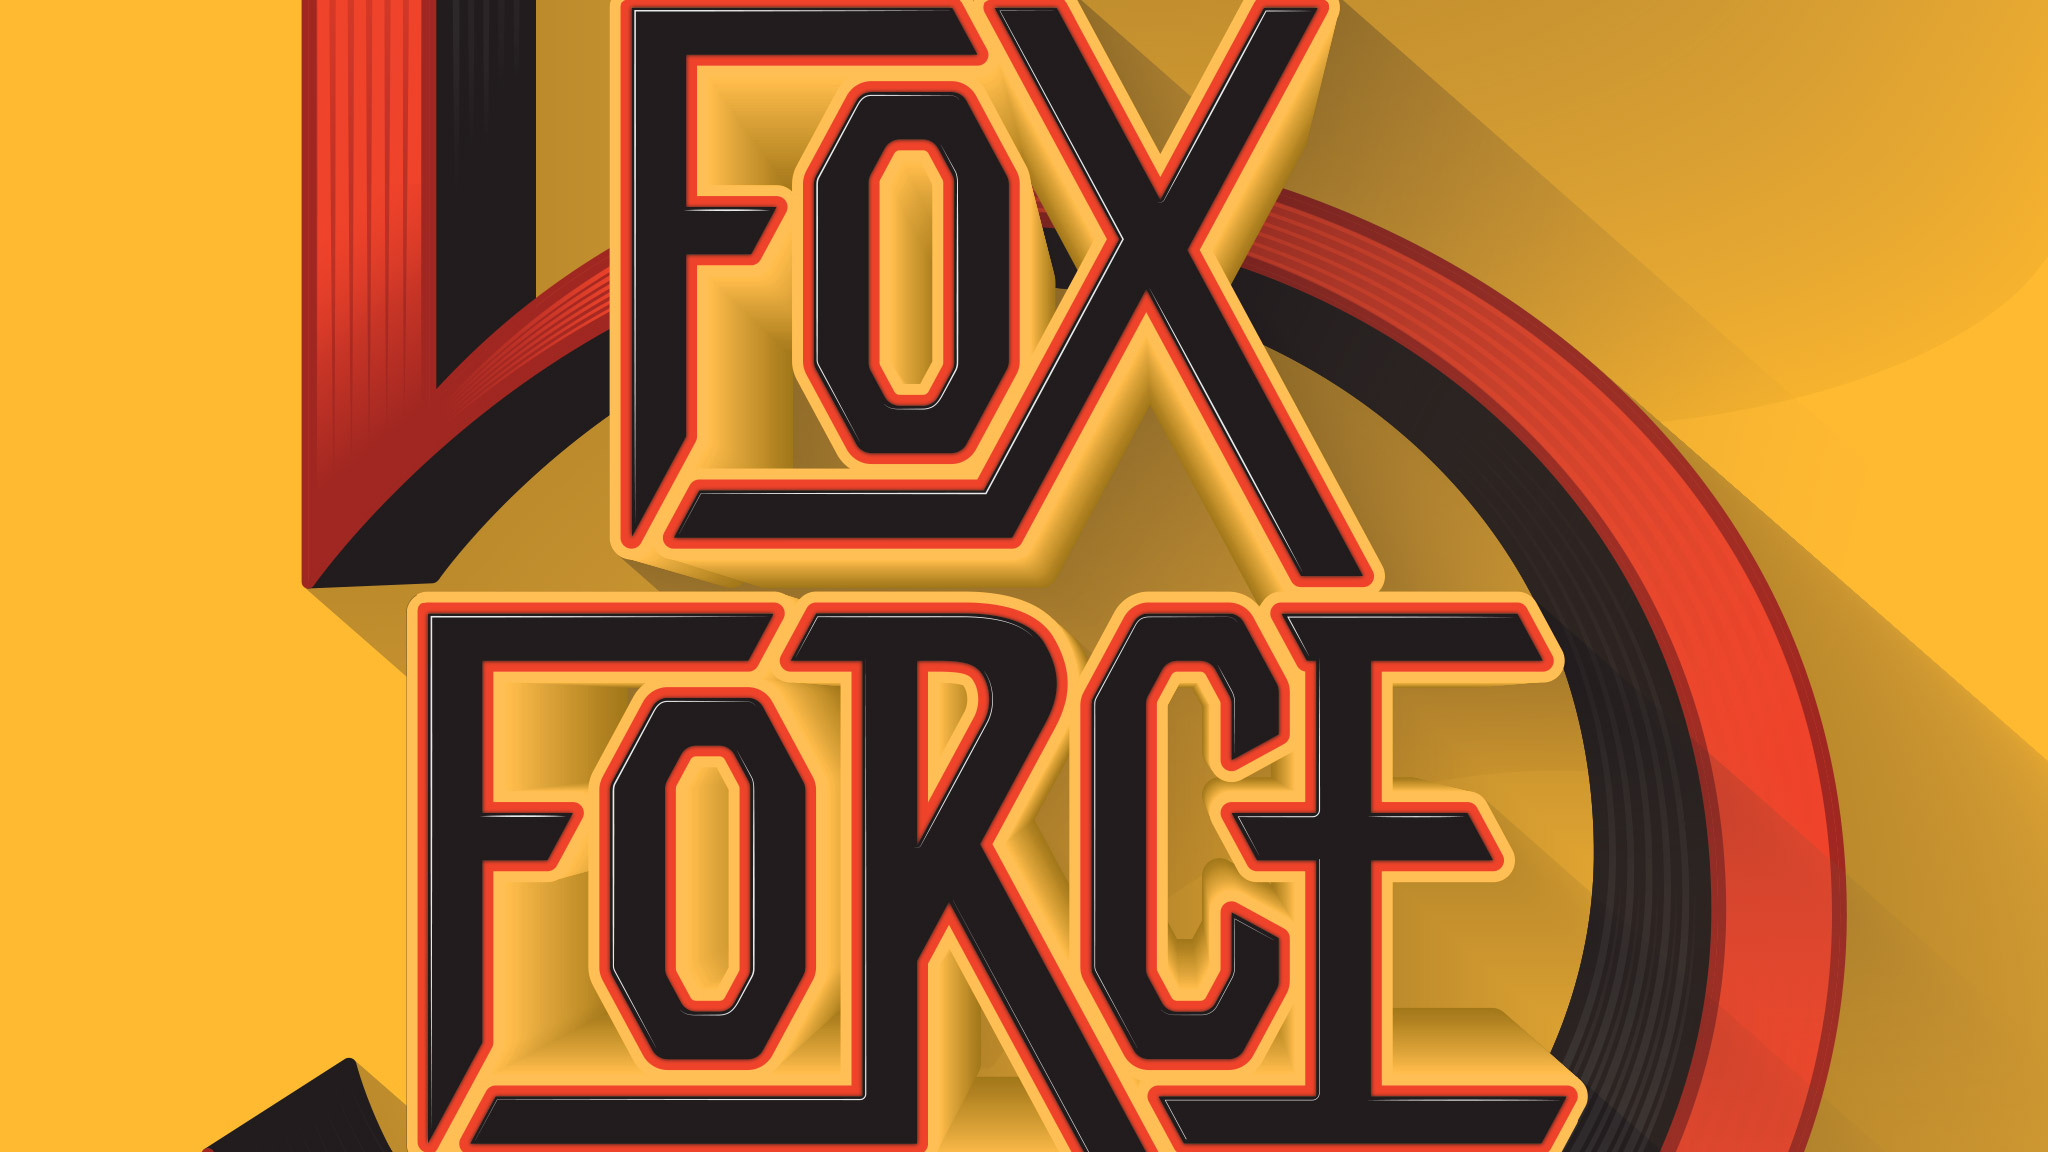 Pulp Fiction Art Tribute | Fox Force 5 Lettering Zoom